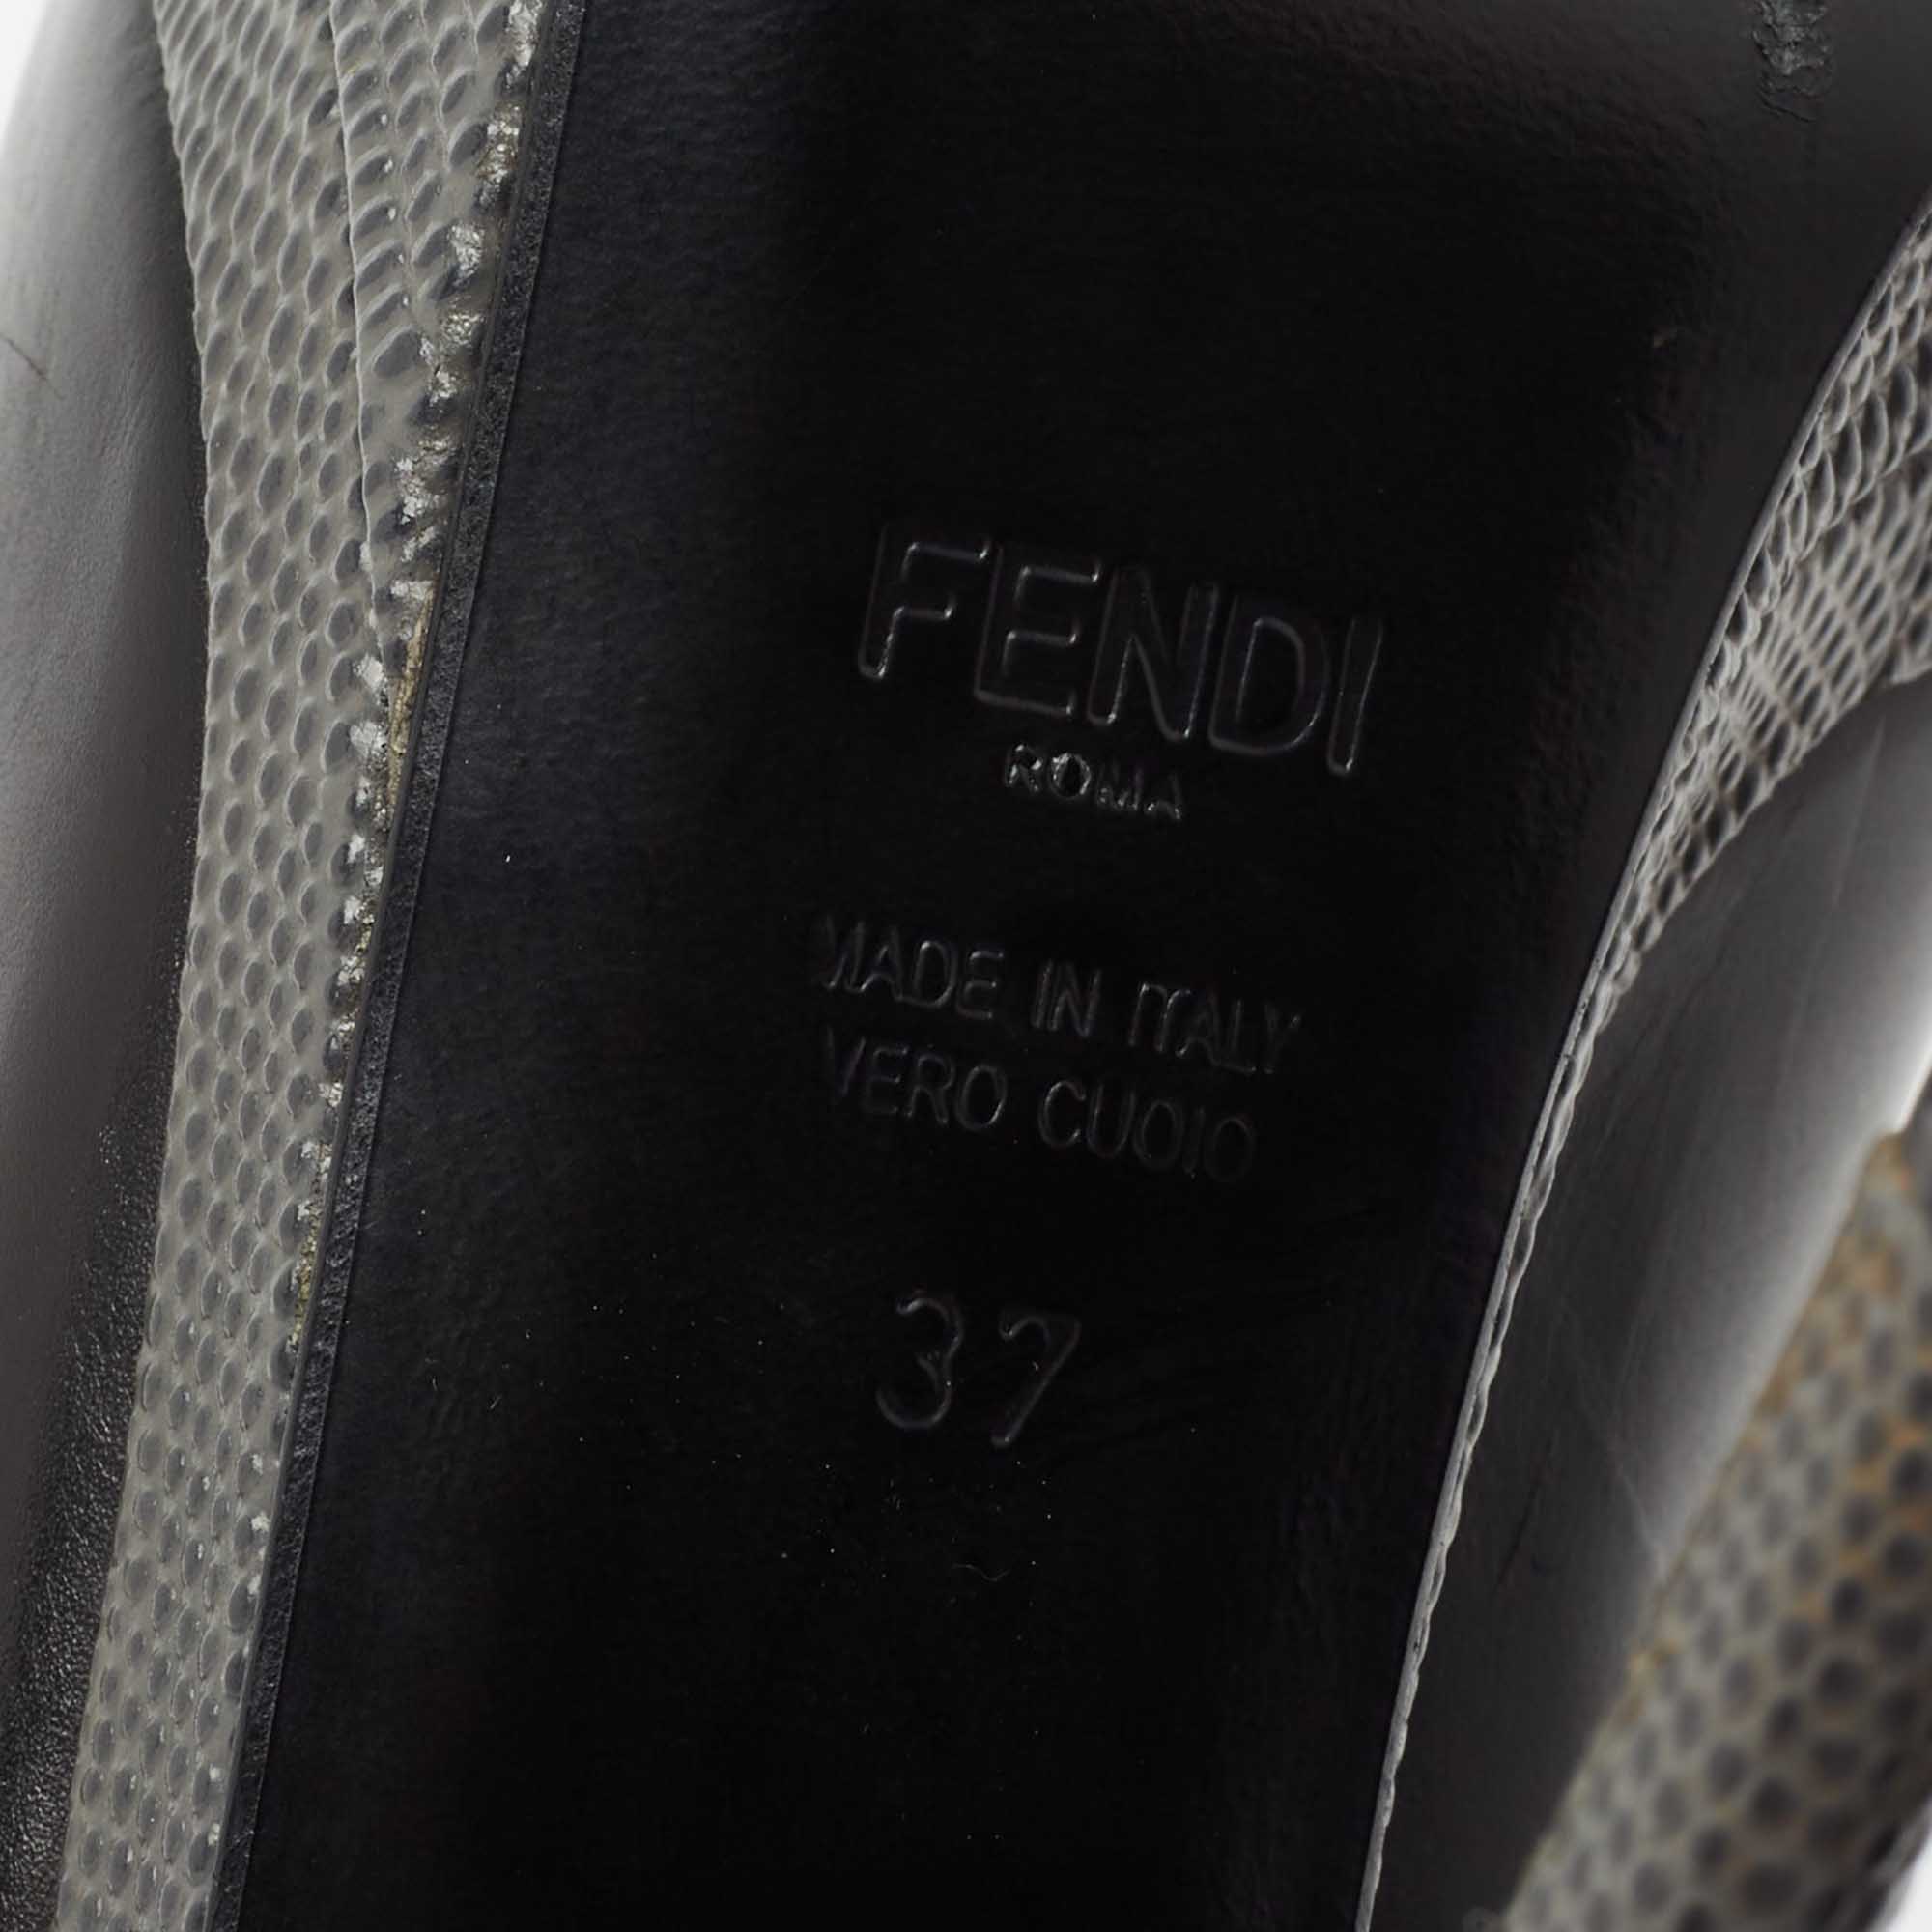 Fendi Black/Grey Leather And Lizard Embossed Heel Platform Pumps Size 37